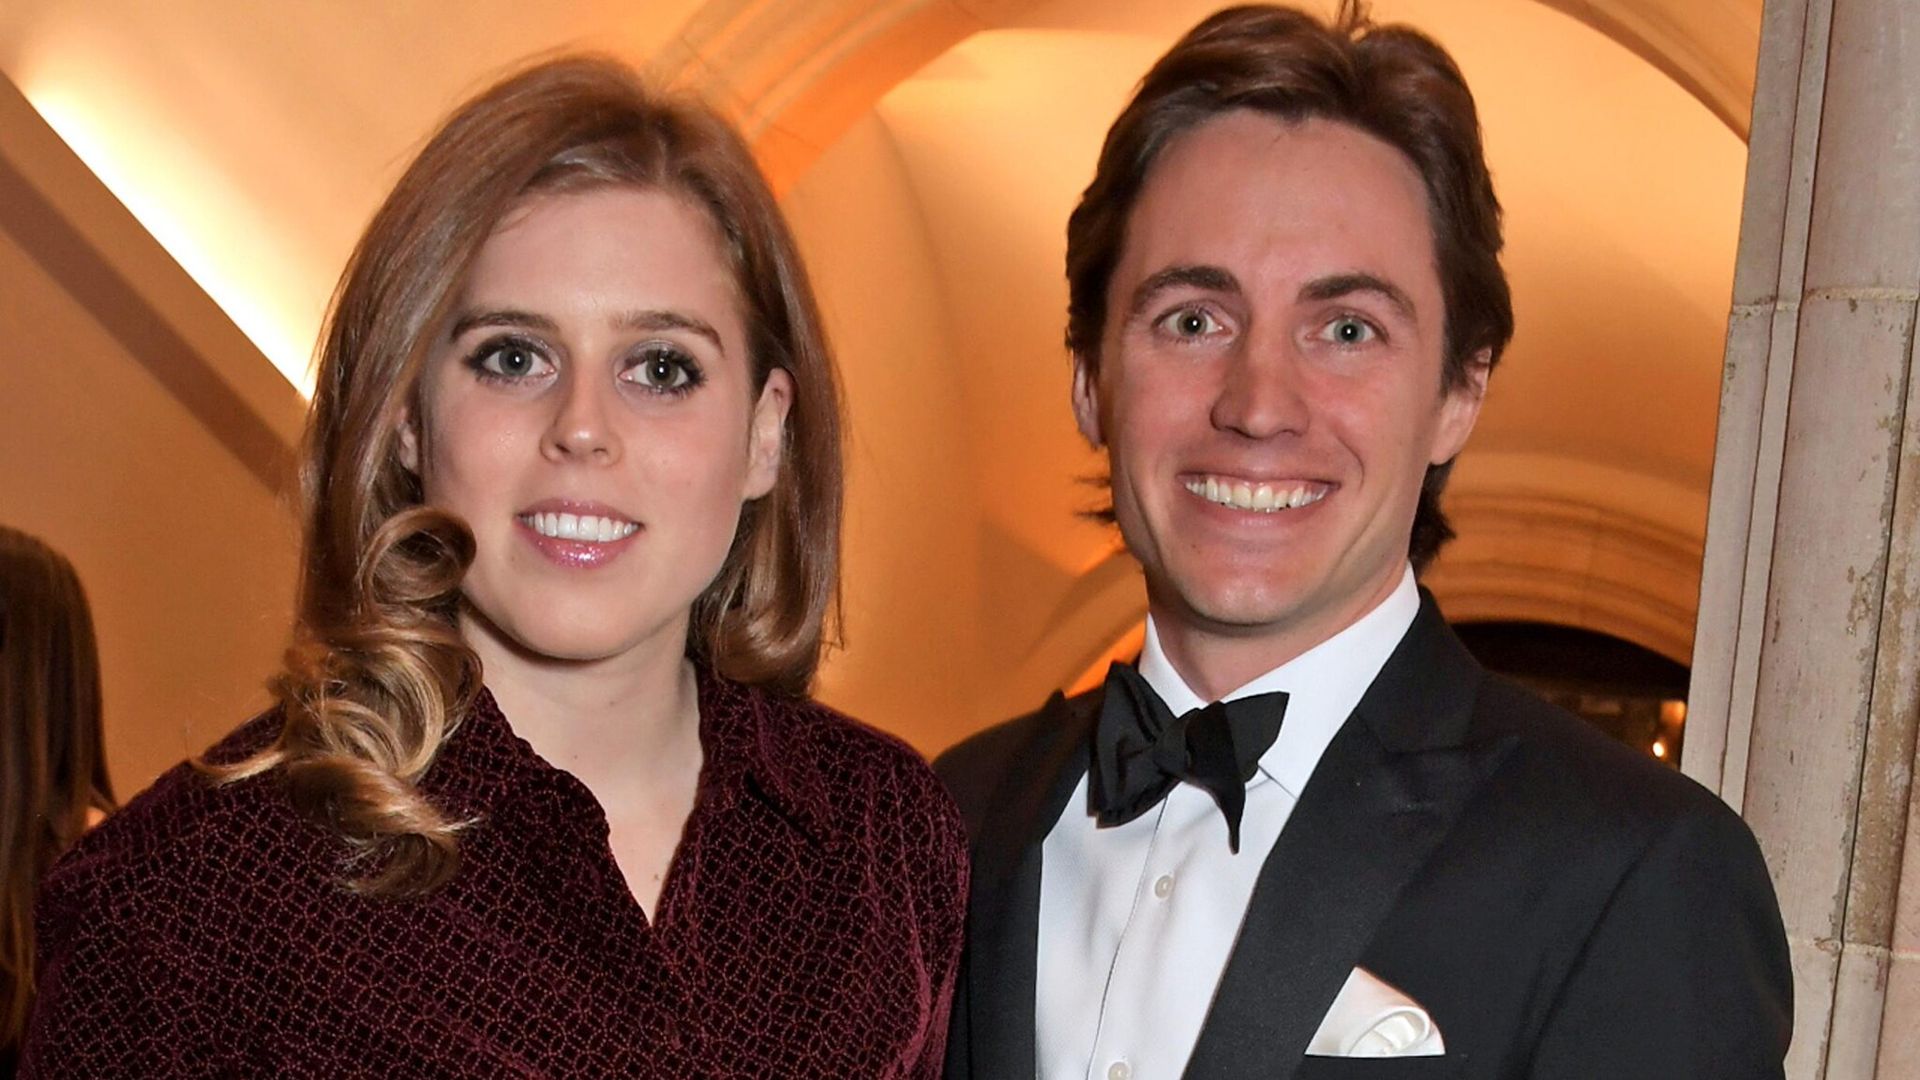 La princesa Beatriz y Edoardo Mapelli Mozzi se casan en secreto en una ceremonia en Windsor